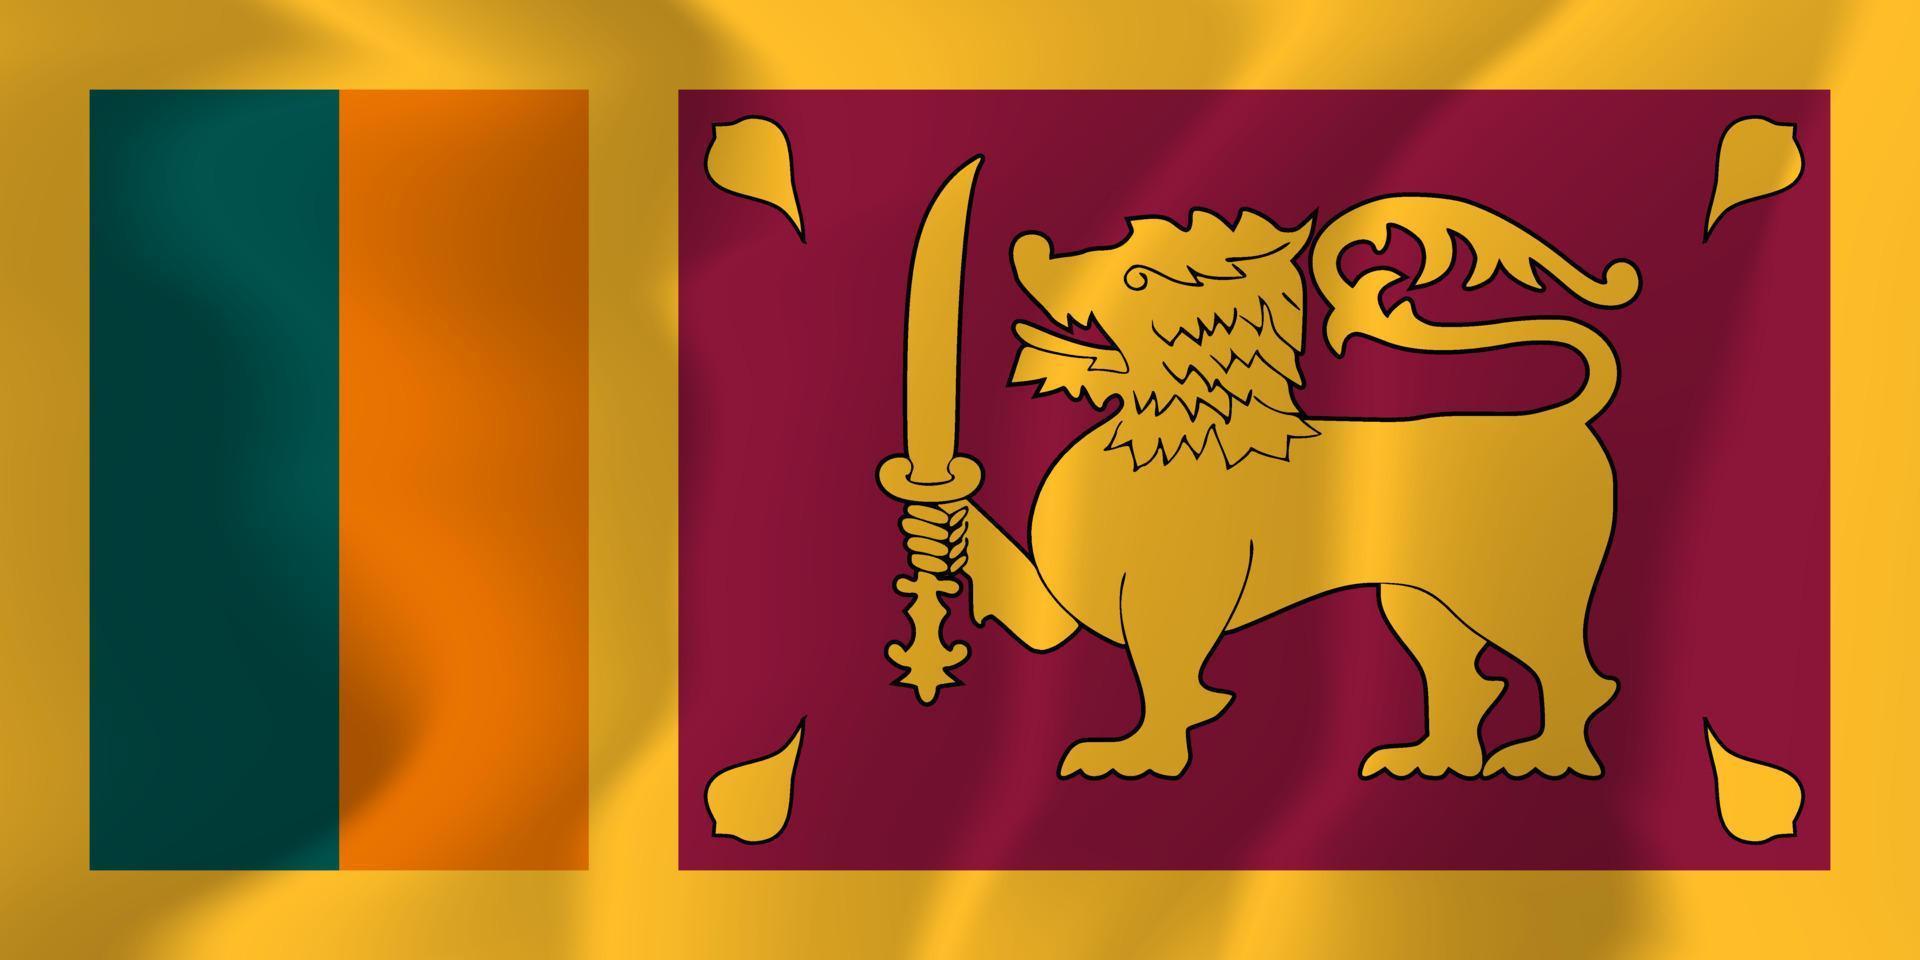 sri lanka national wehende flagge hintergrundillustration vektor